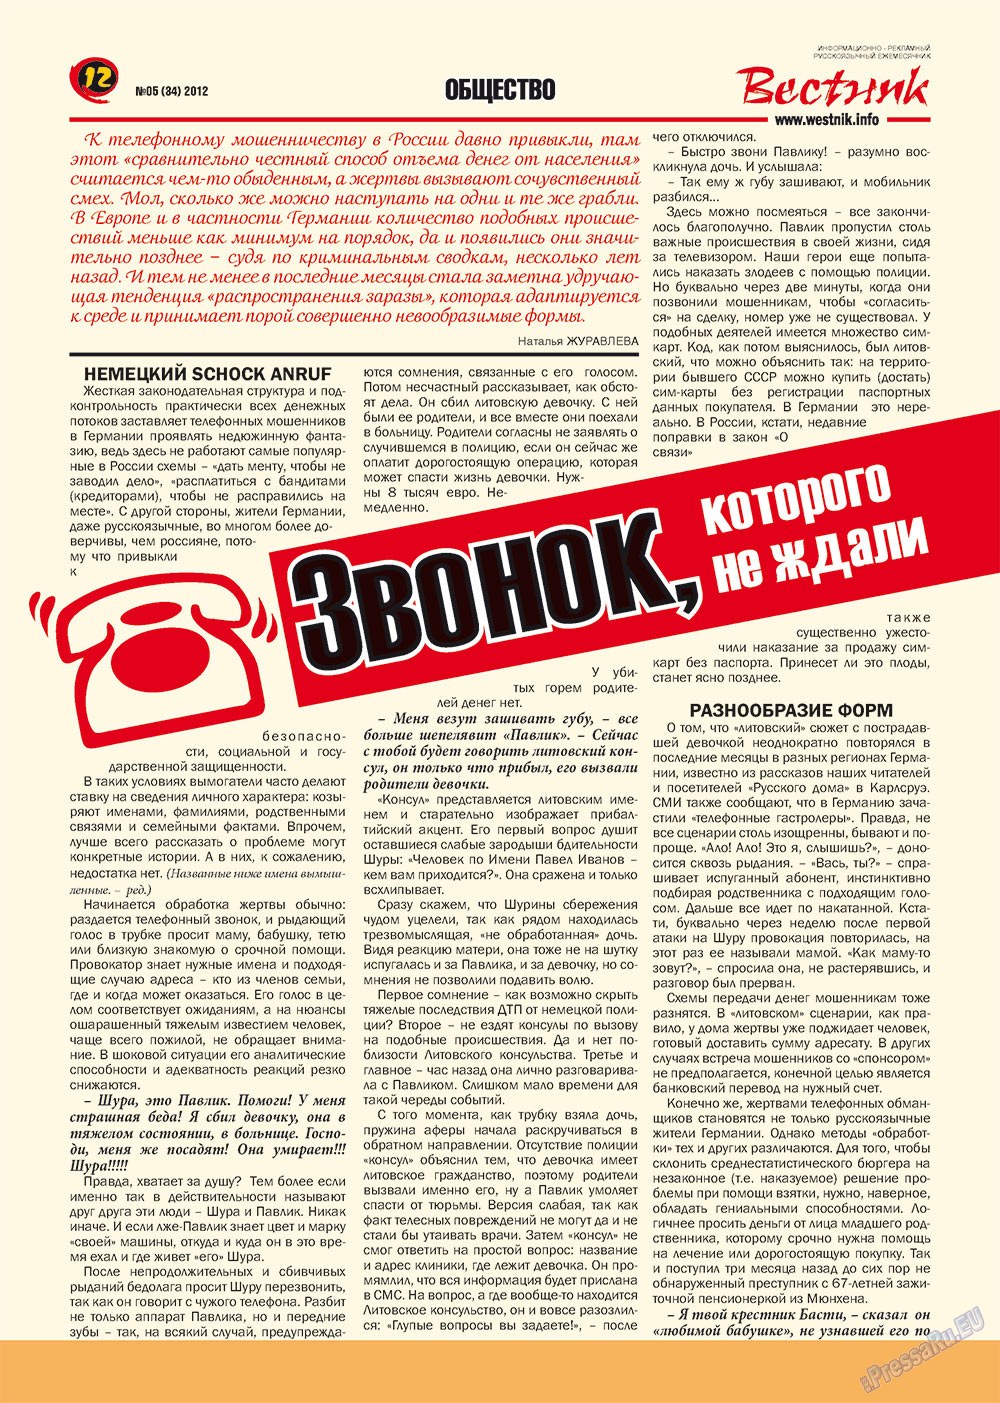 Вестник-info (журнал). 2012 год, номер 5, стр. 12